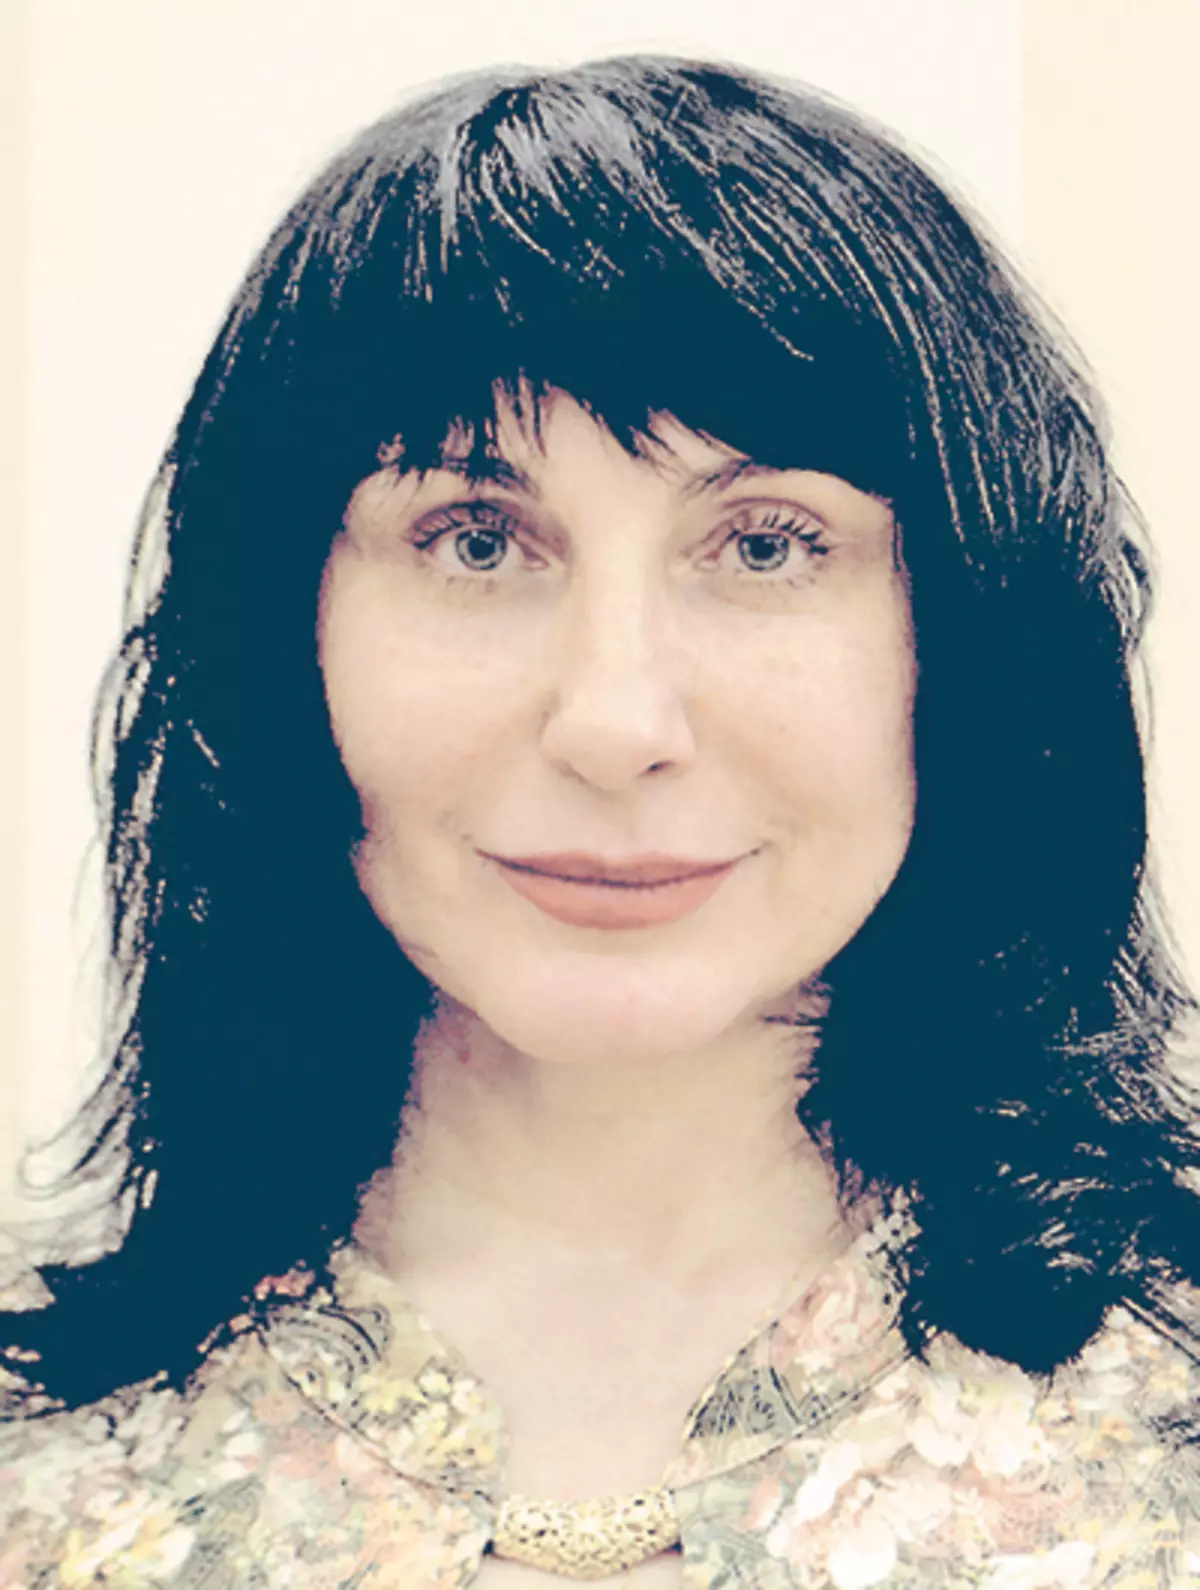 Natalia Grishina, doktorea, gastroenterologoa, nutrizionista